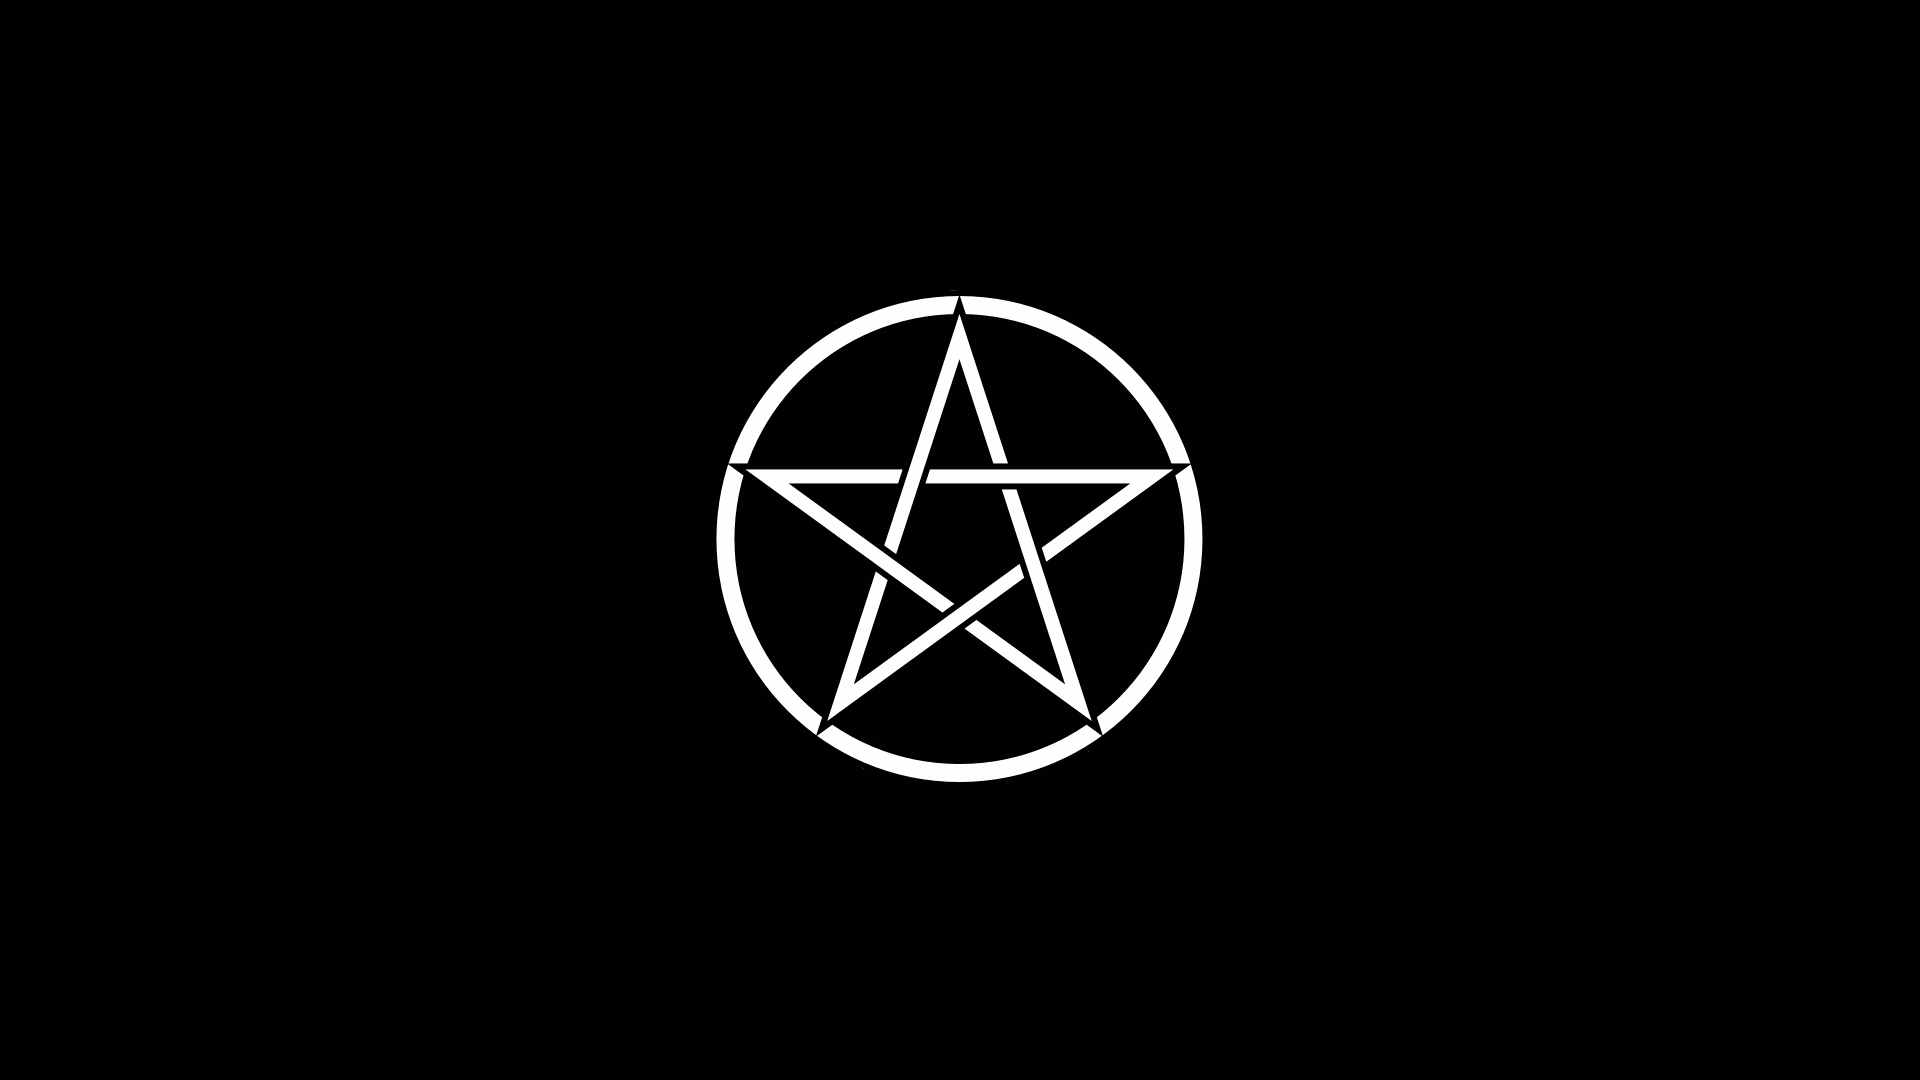 General 1920x1080 Pentacle Wicca pagan satanic